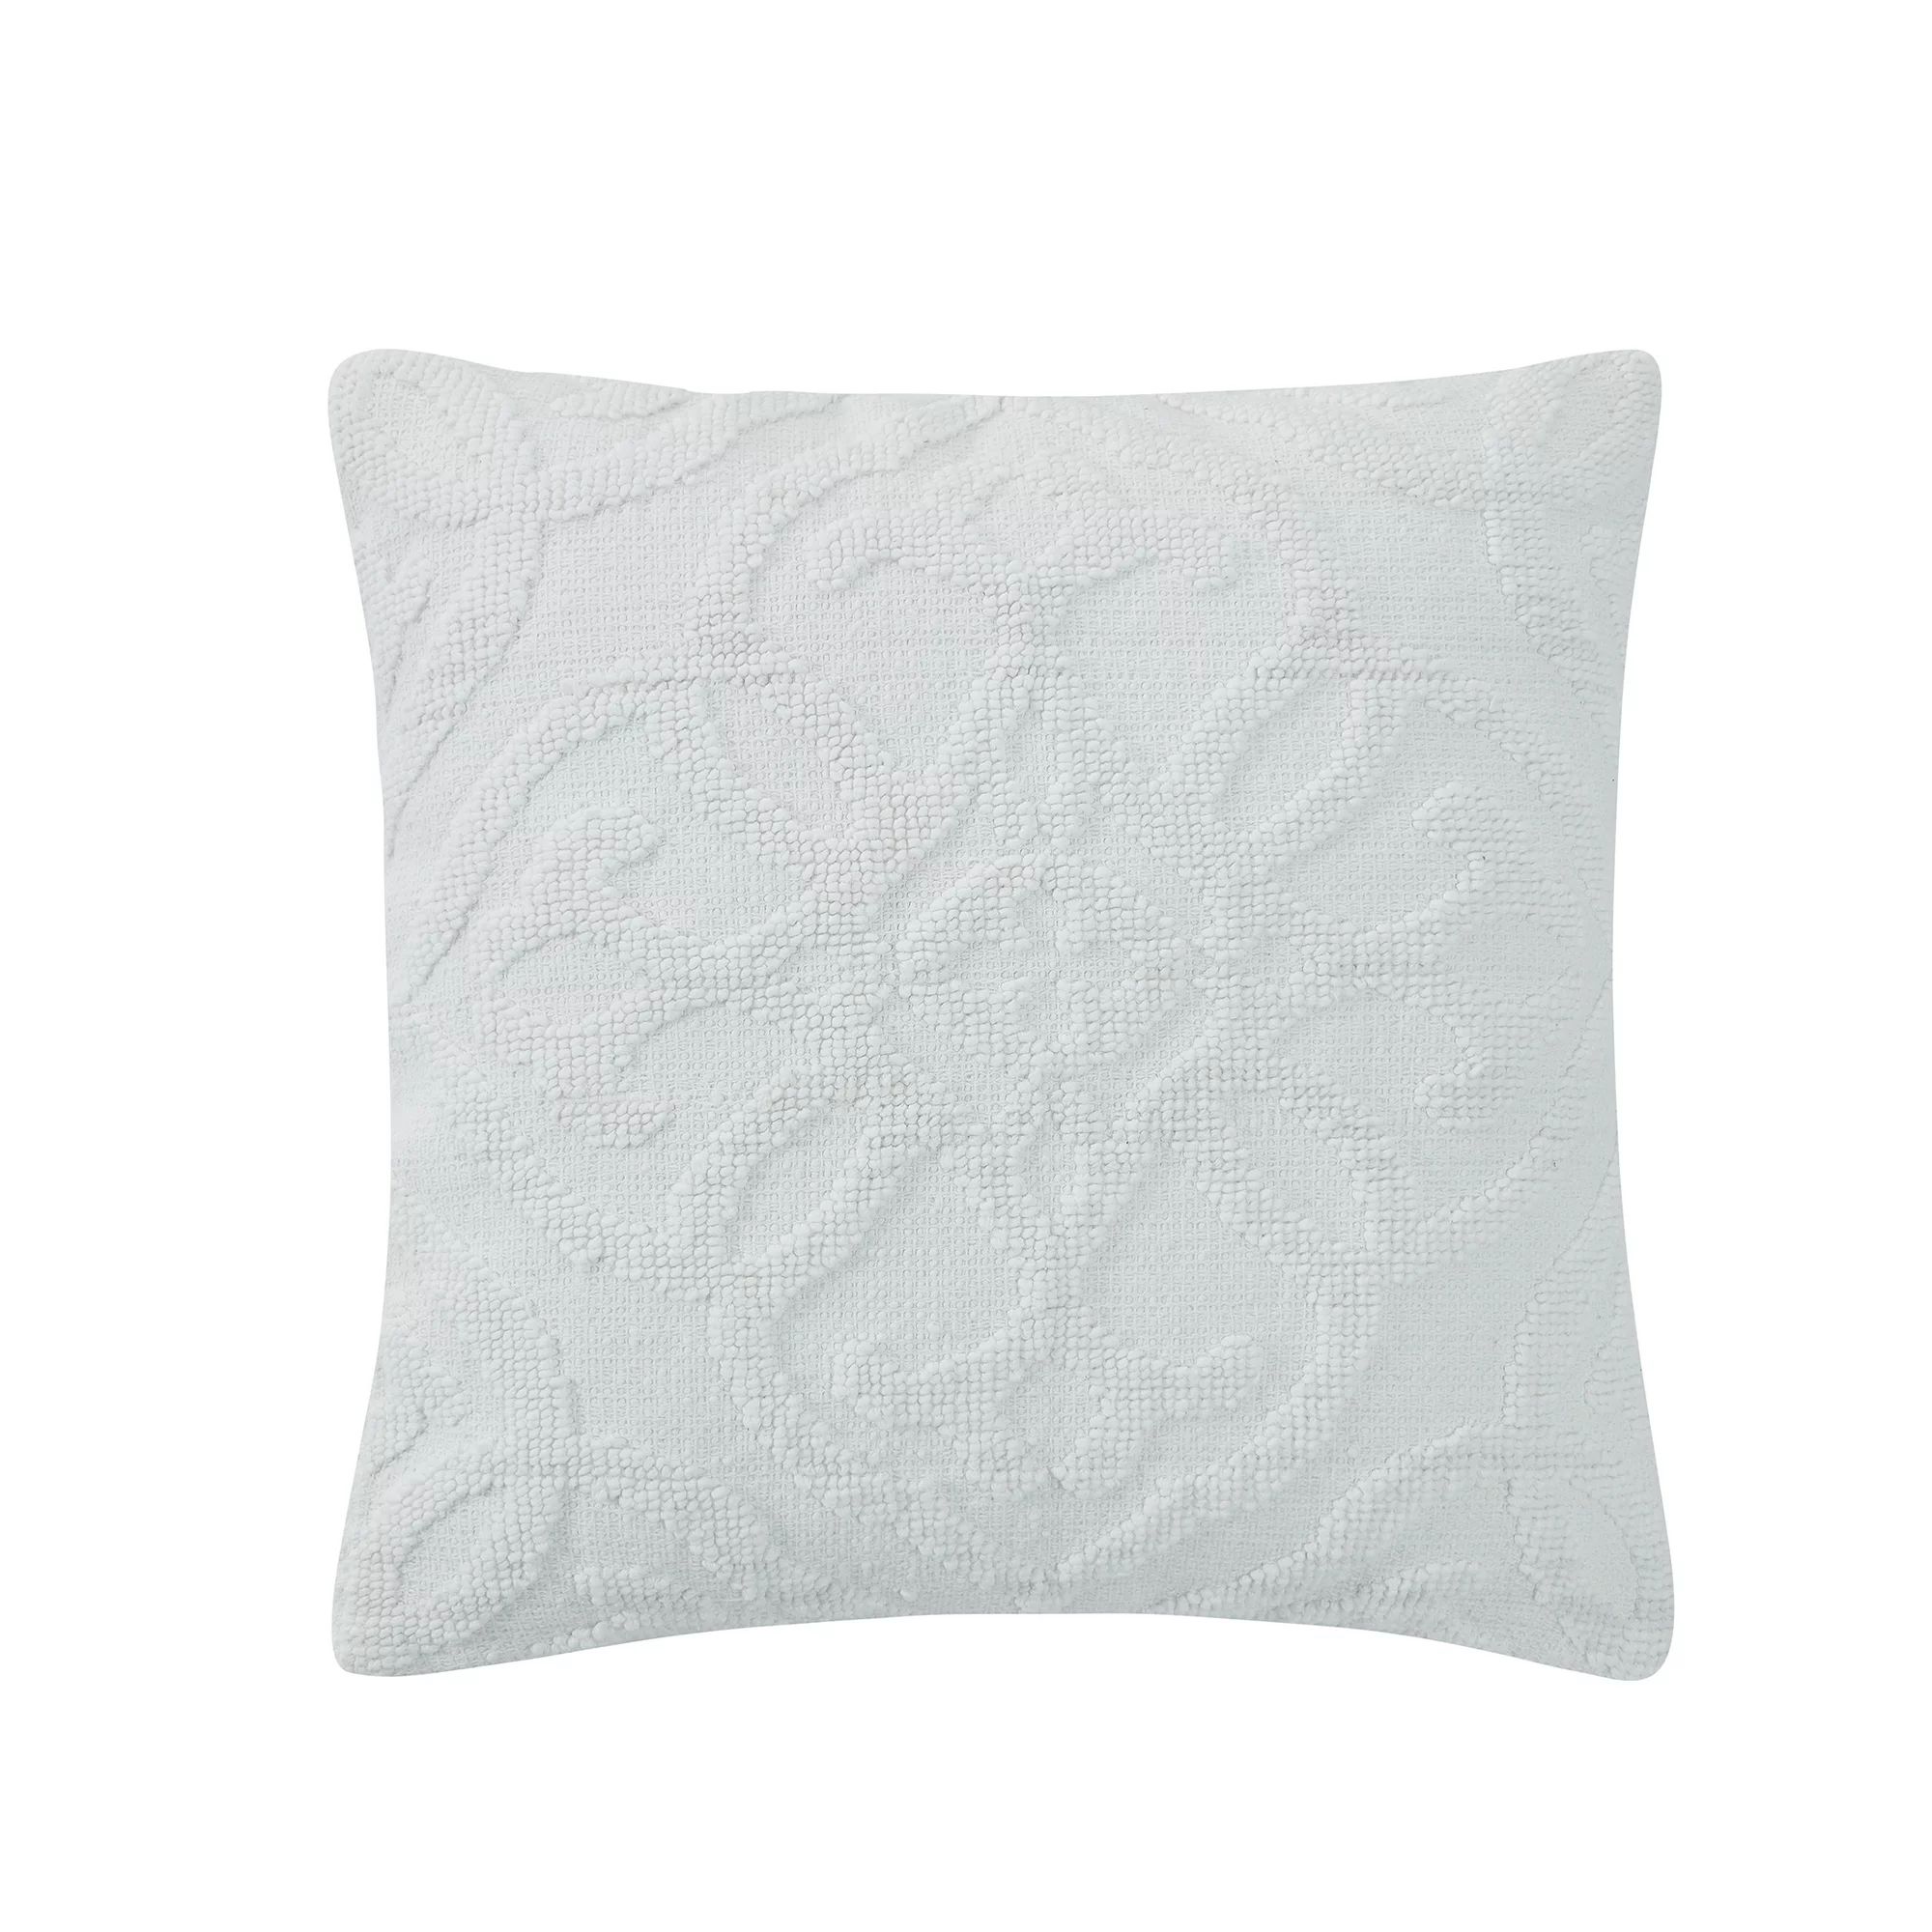 My Texas House Addison Woven Cotton Square Decorative Pillow Cover, 20" x 20", Bright White | Walmart (US)